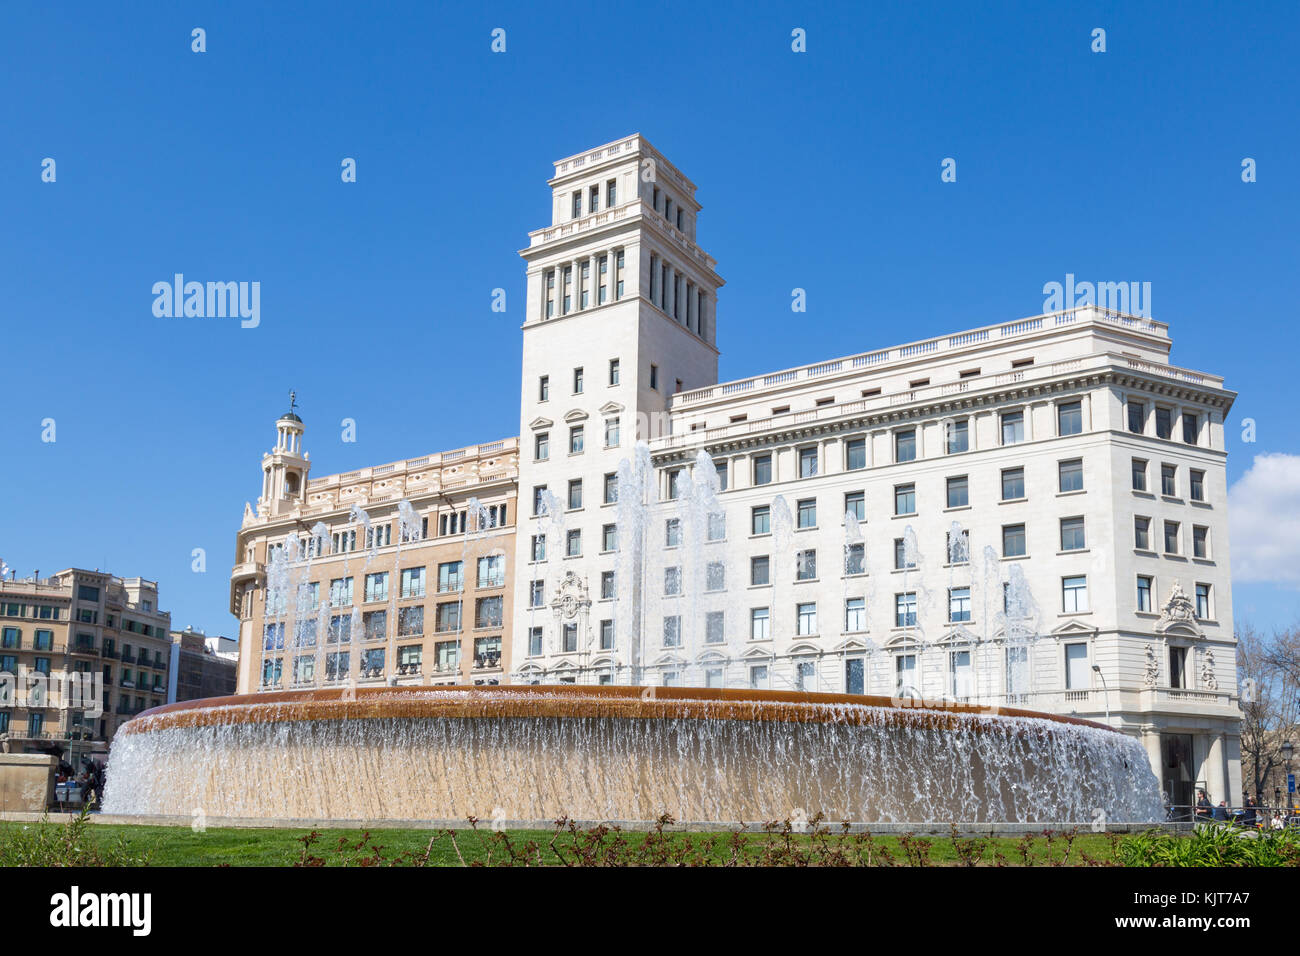 Fountain and building at Placa Catalunja or Catalonia Square, Barcelona, Spain Stock Photo